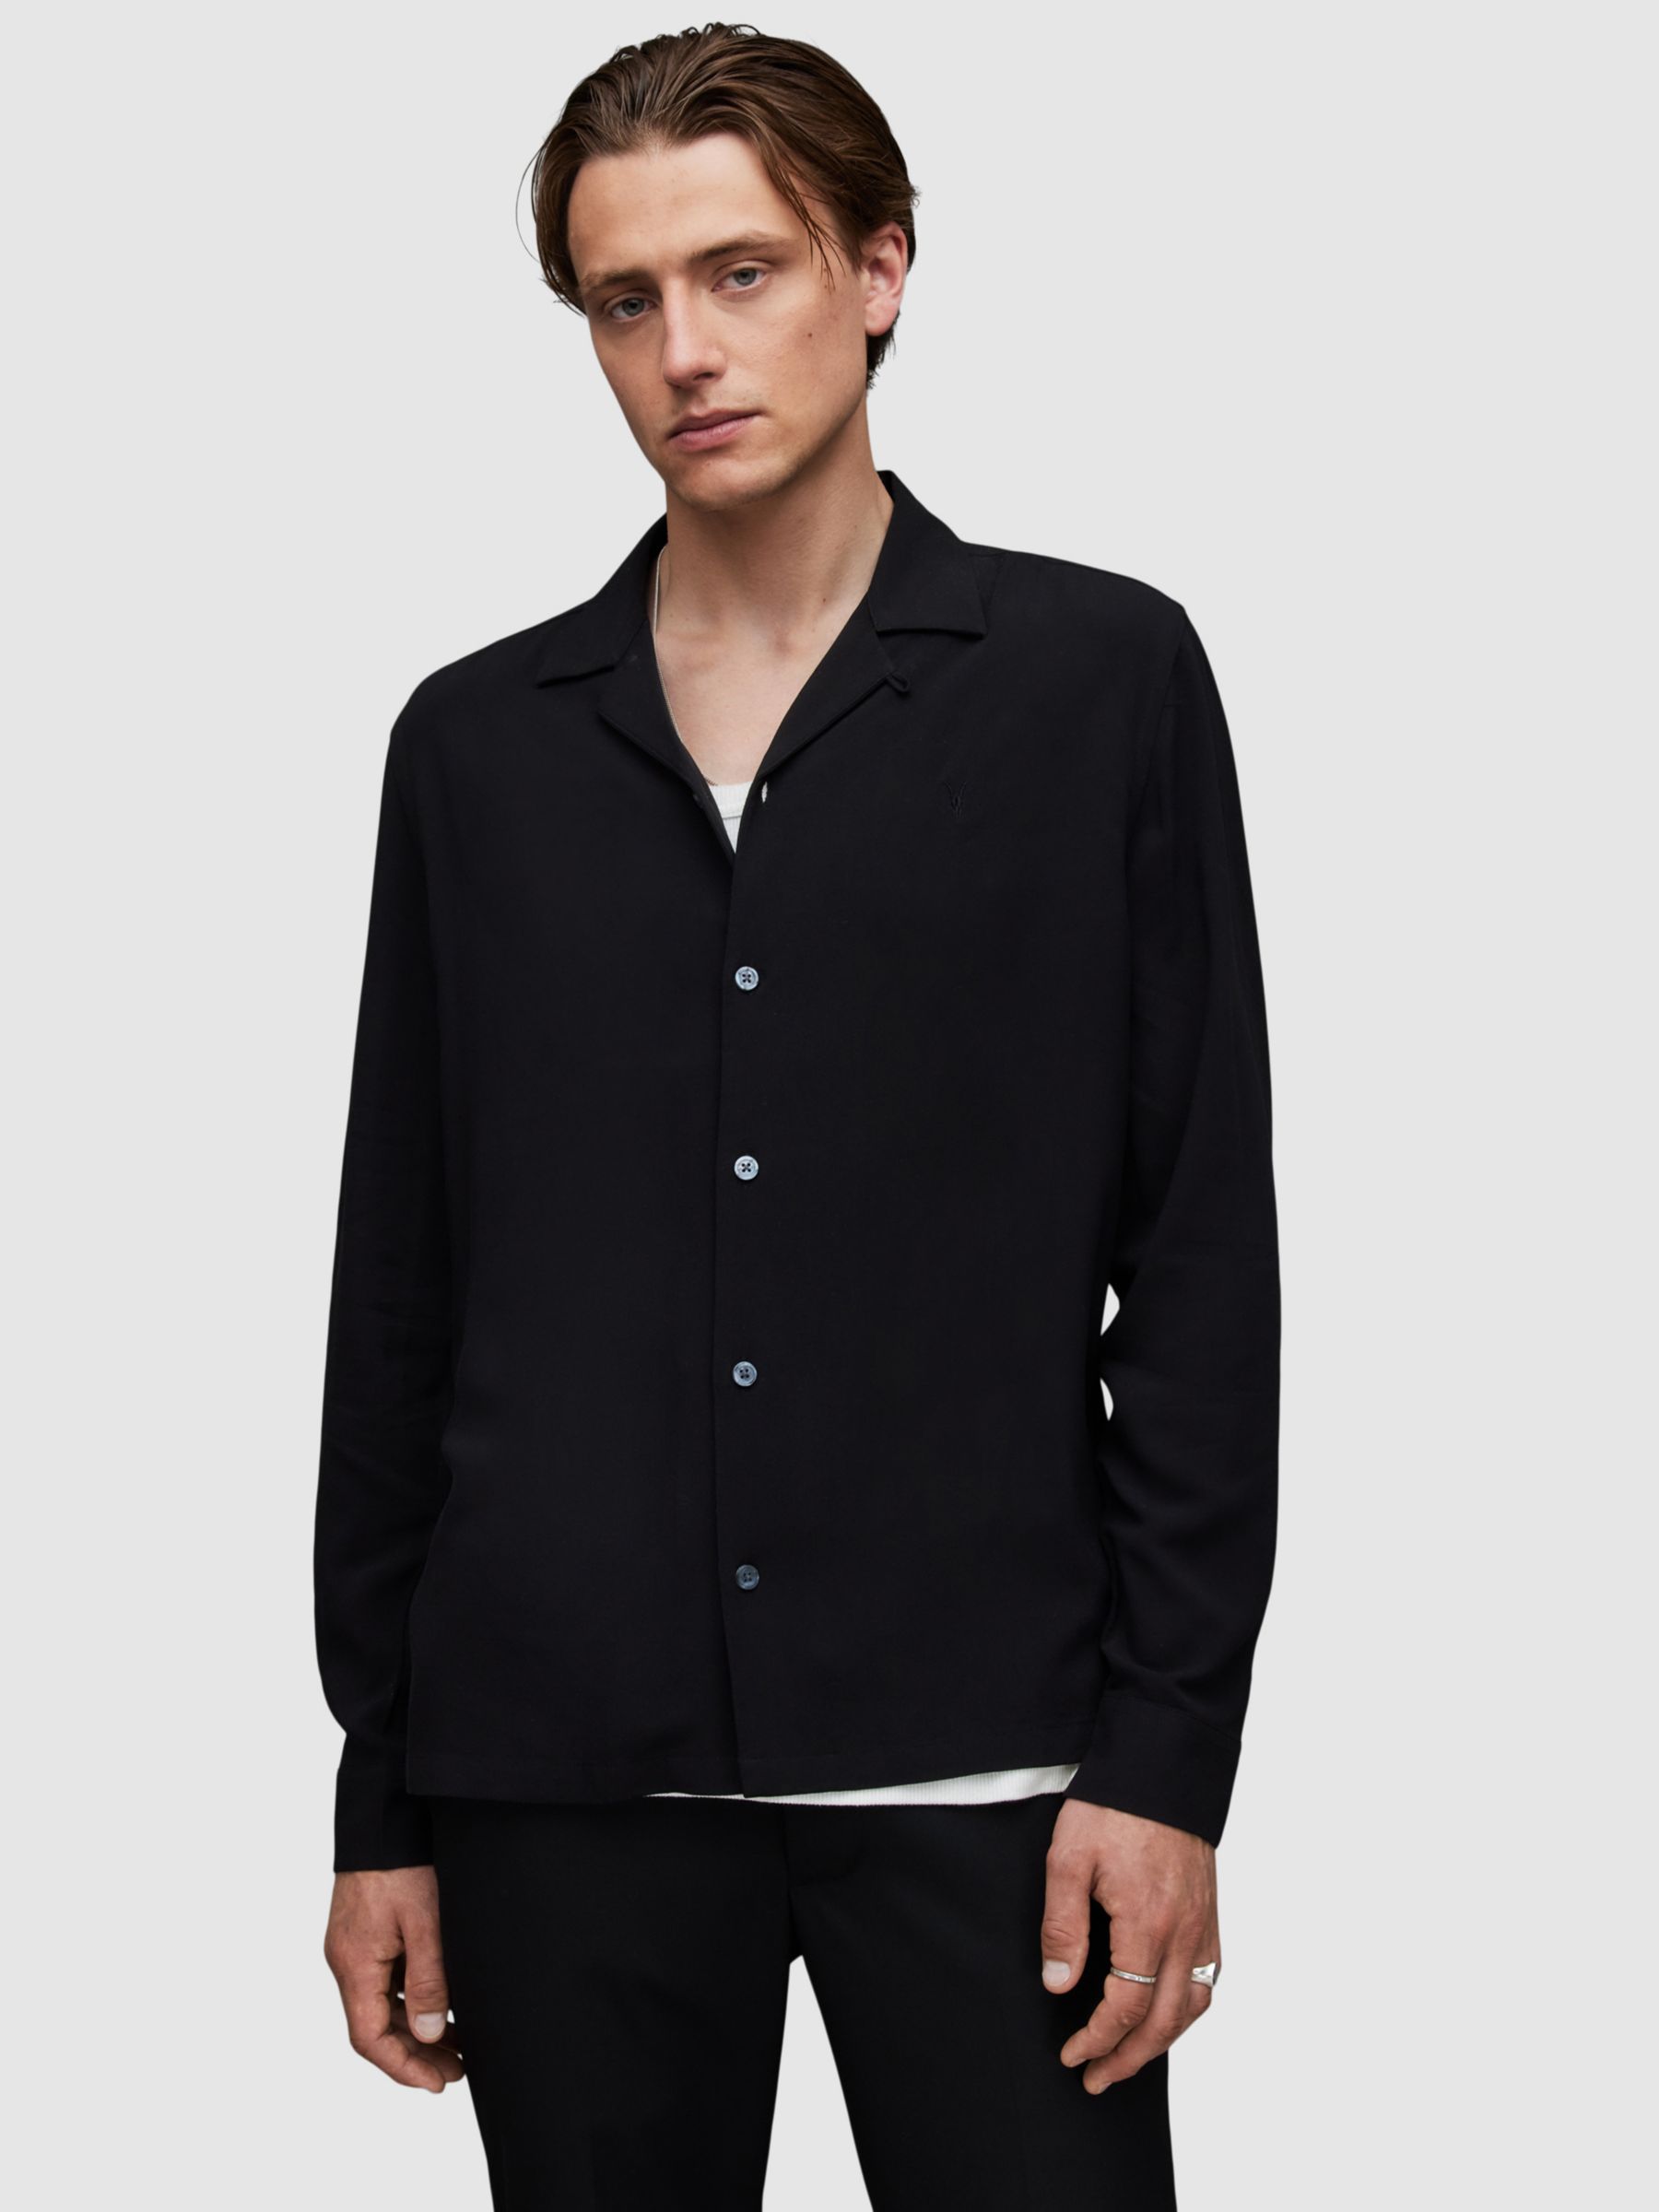 AllSaint Venice Long Sleeve Shirt, Black at John Lewis & Partners